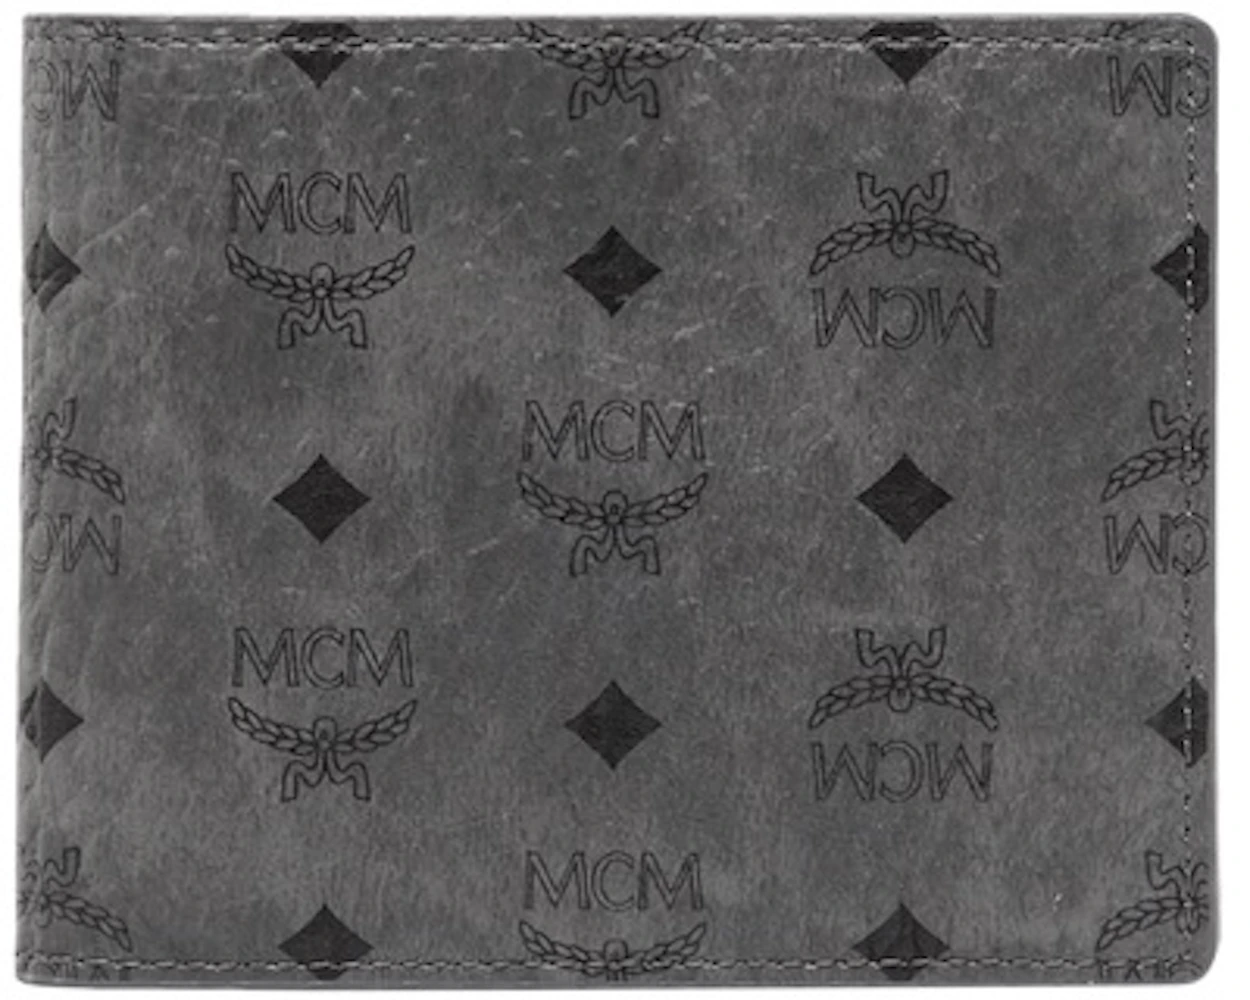 Black Leather Visetos Bifold Wallet